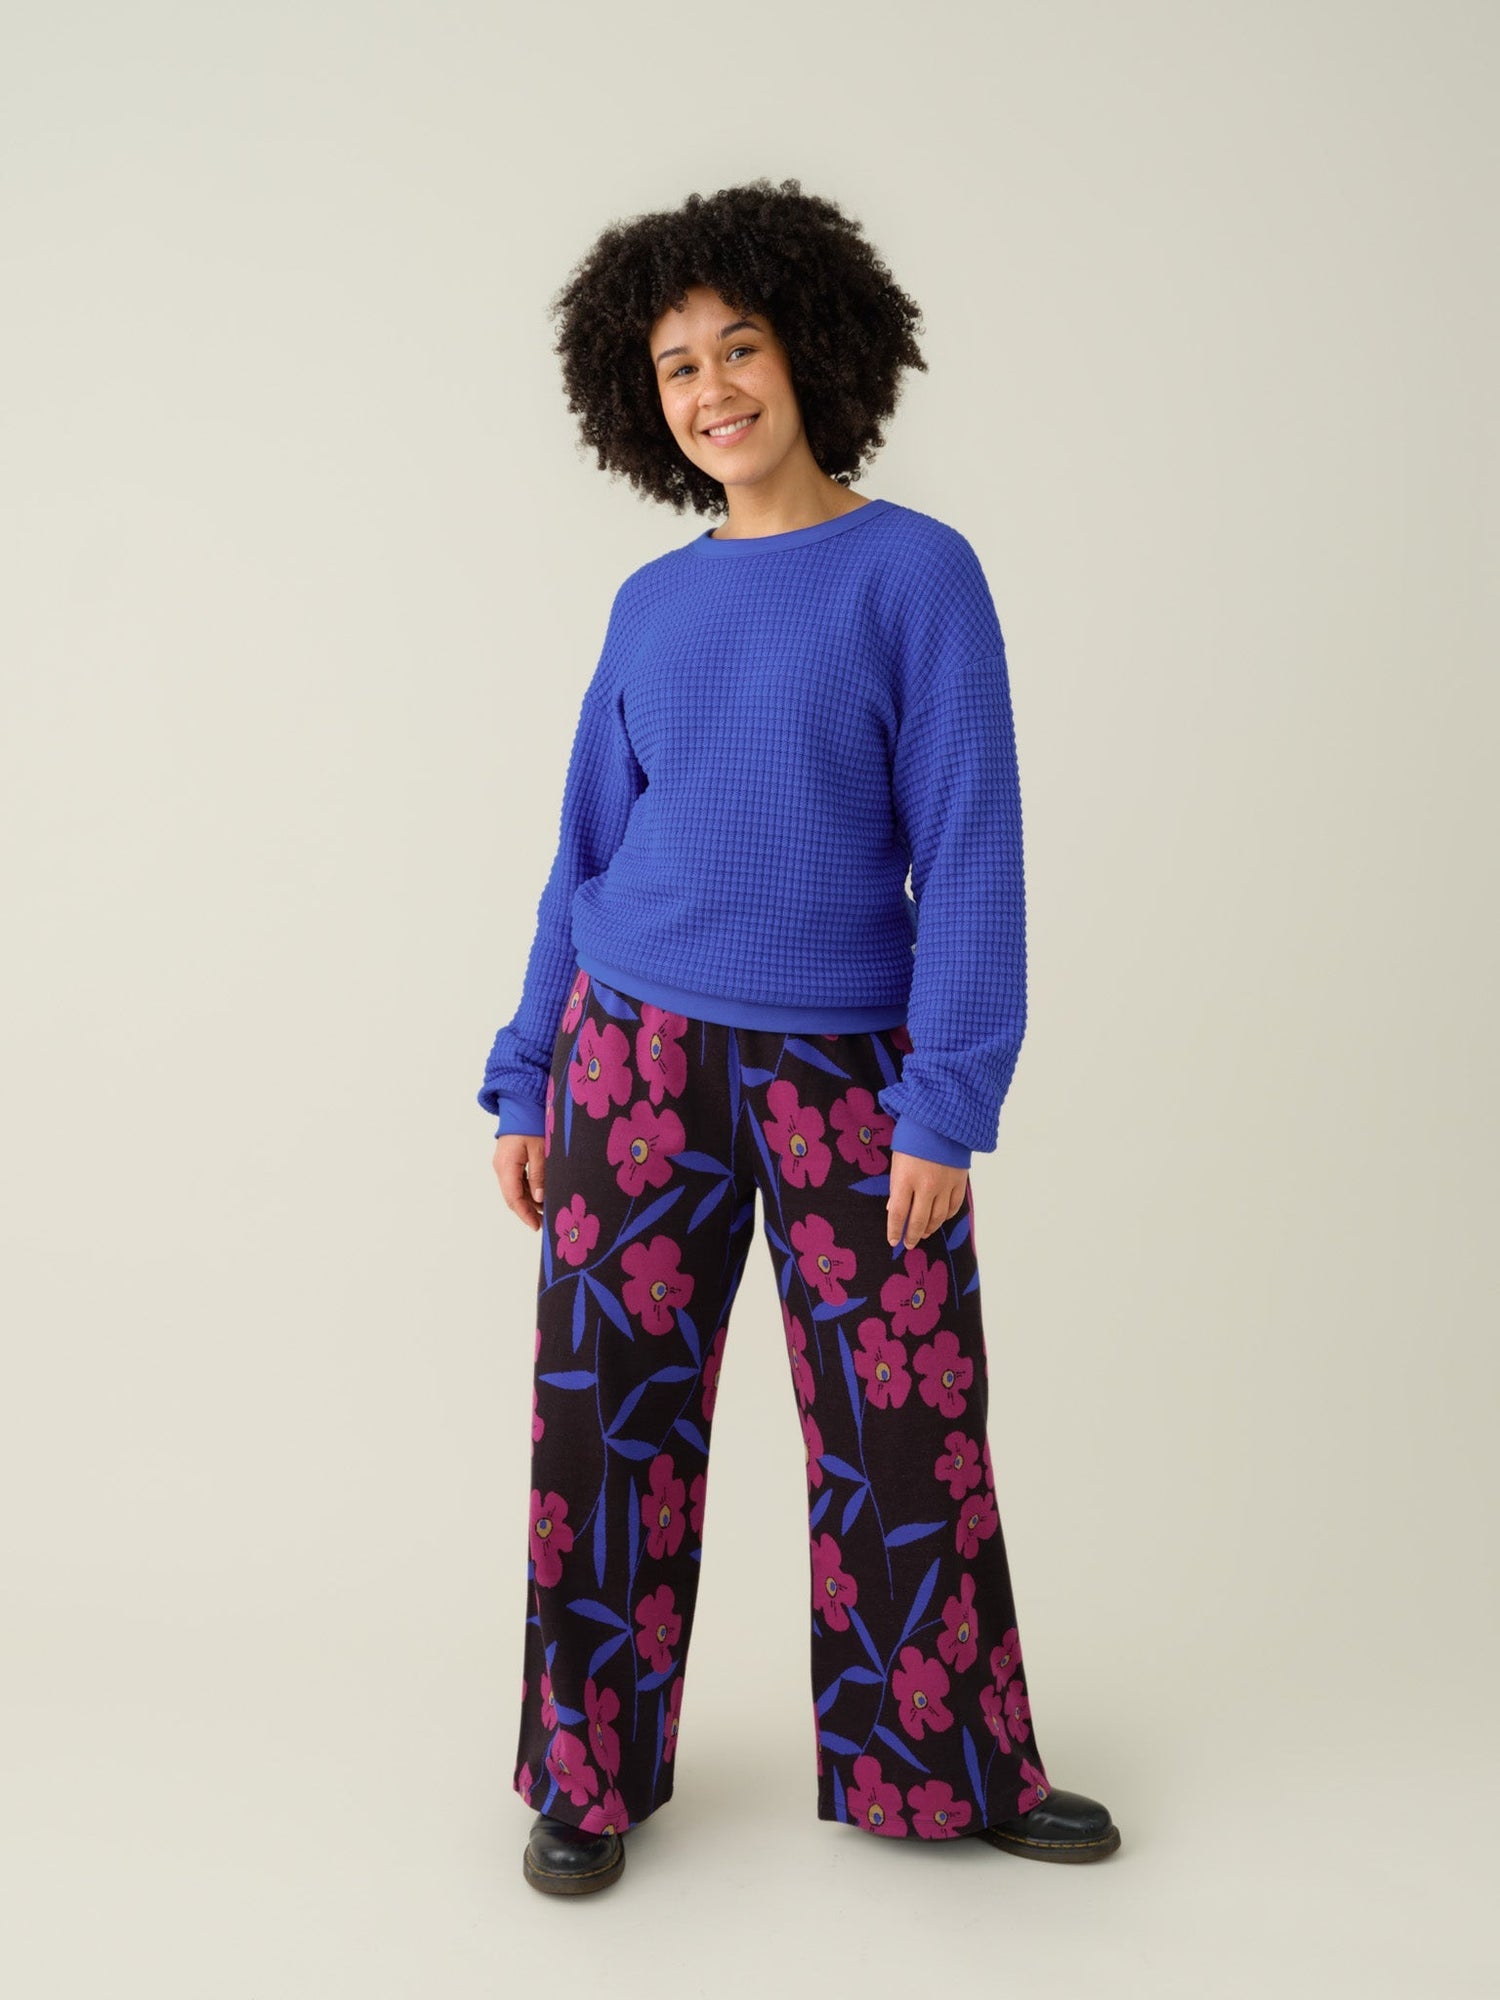 Women's Stellar Knit Shirt Dazzling Blue